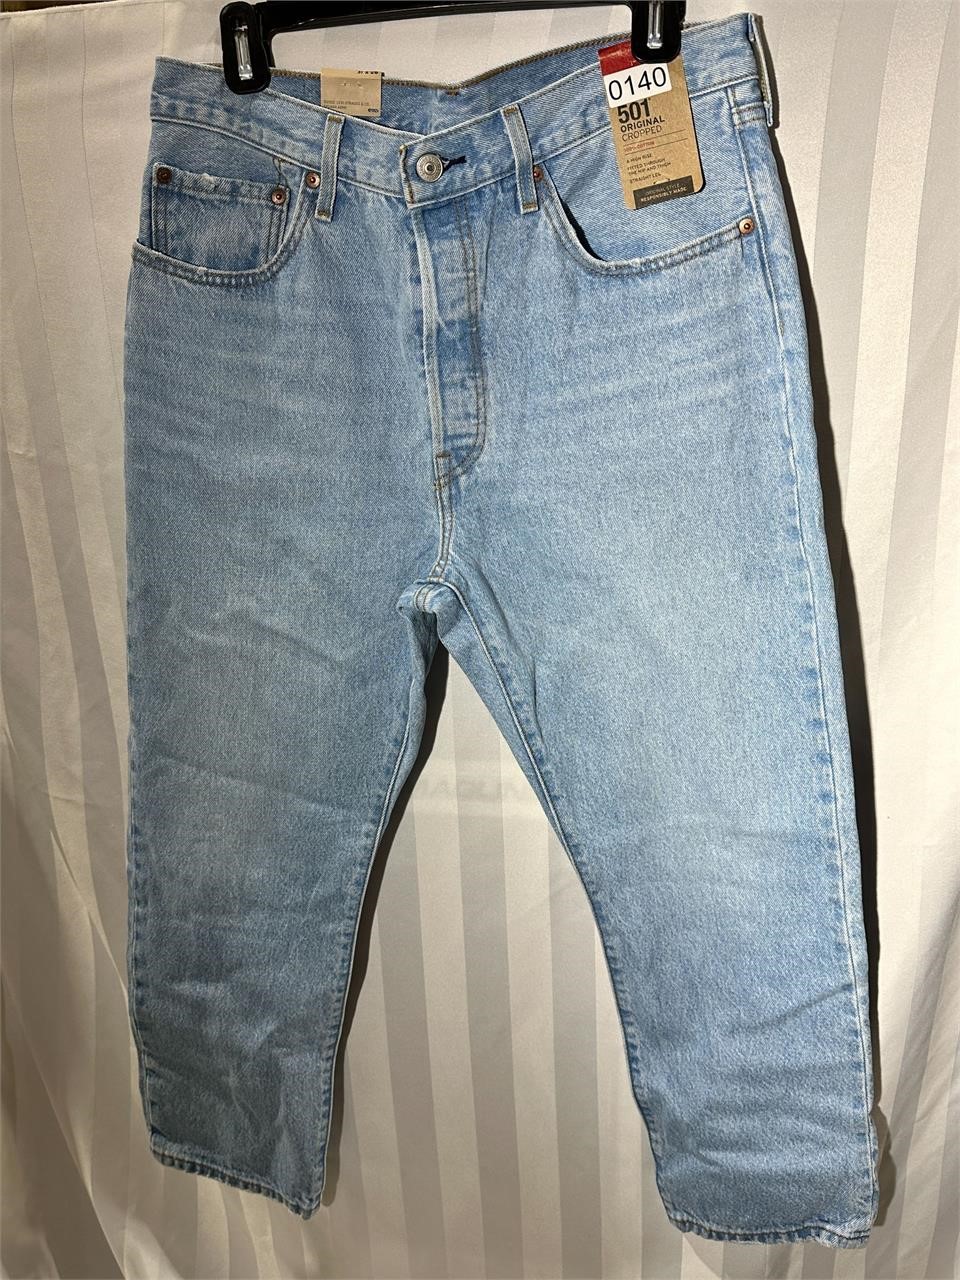 New Levi's 501 original cropped jean 31x26 jeans